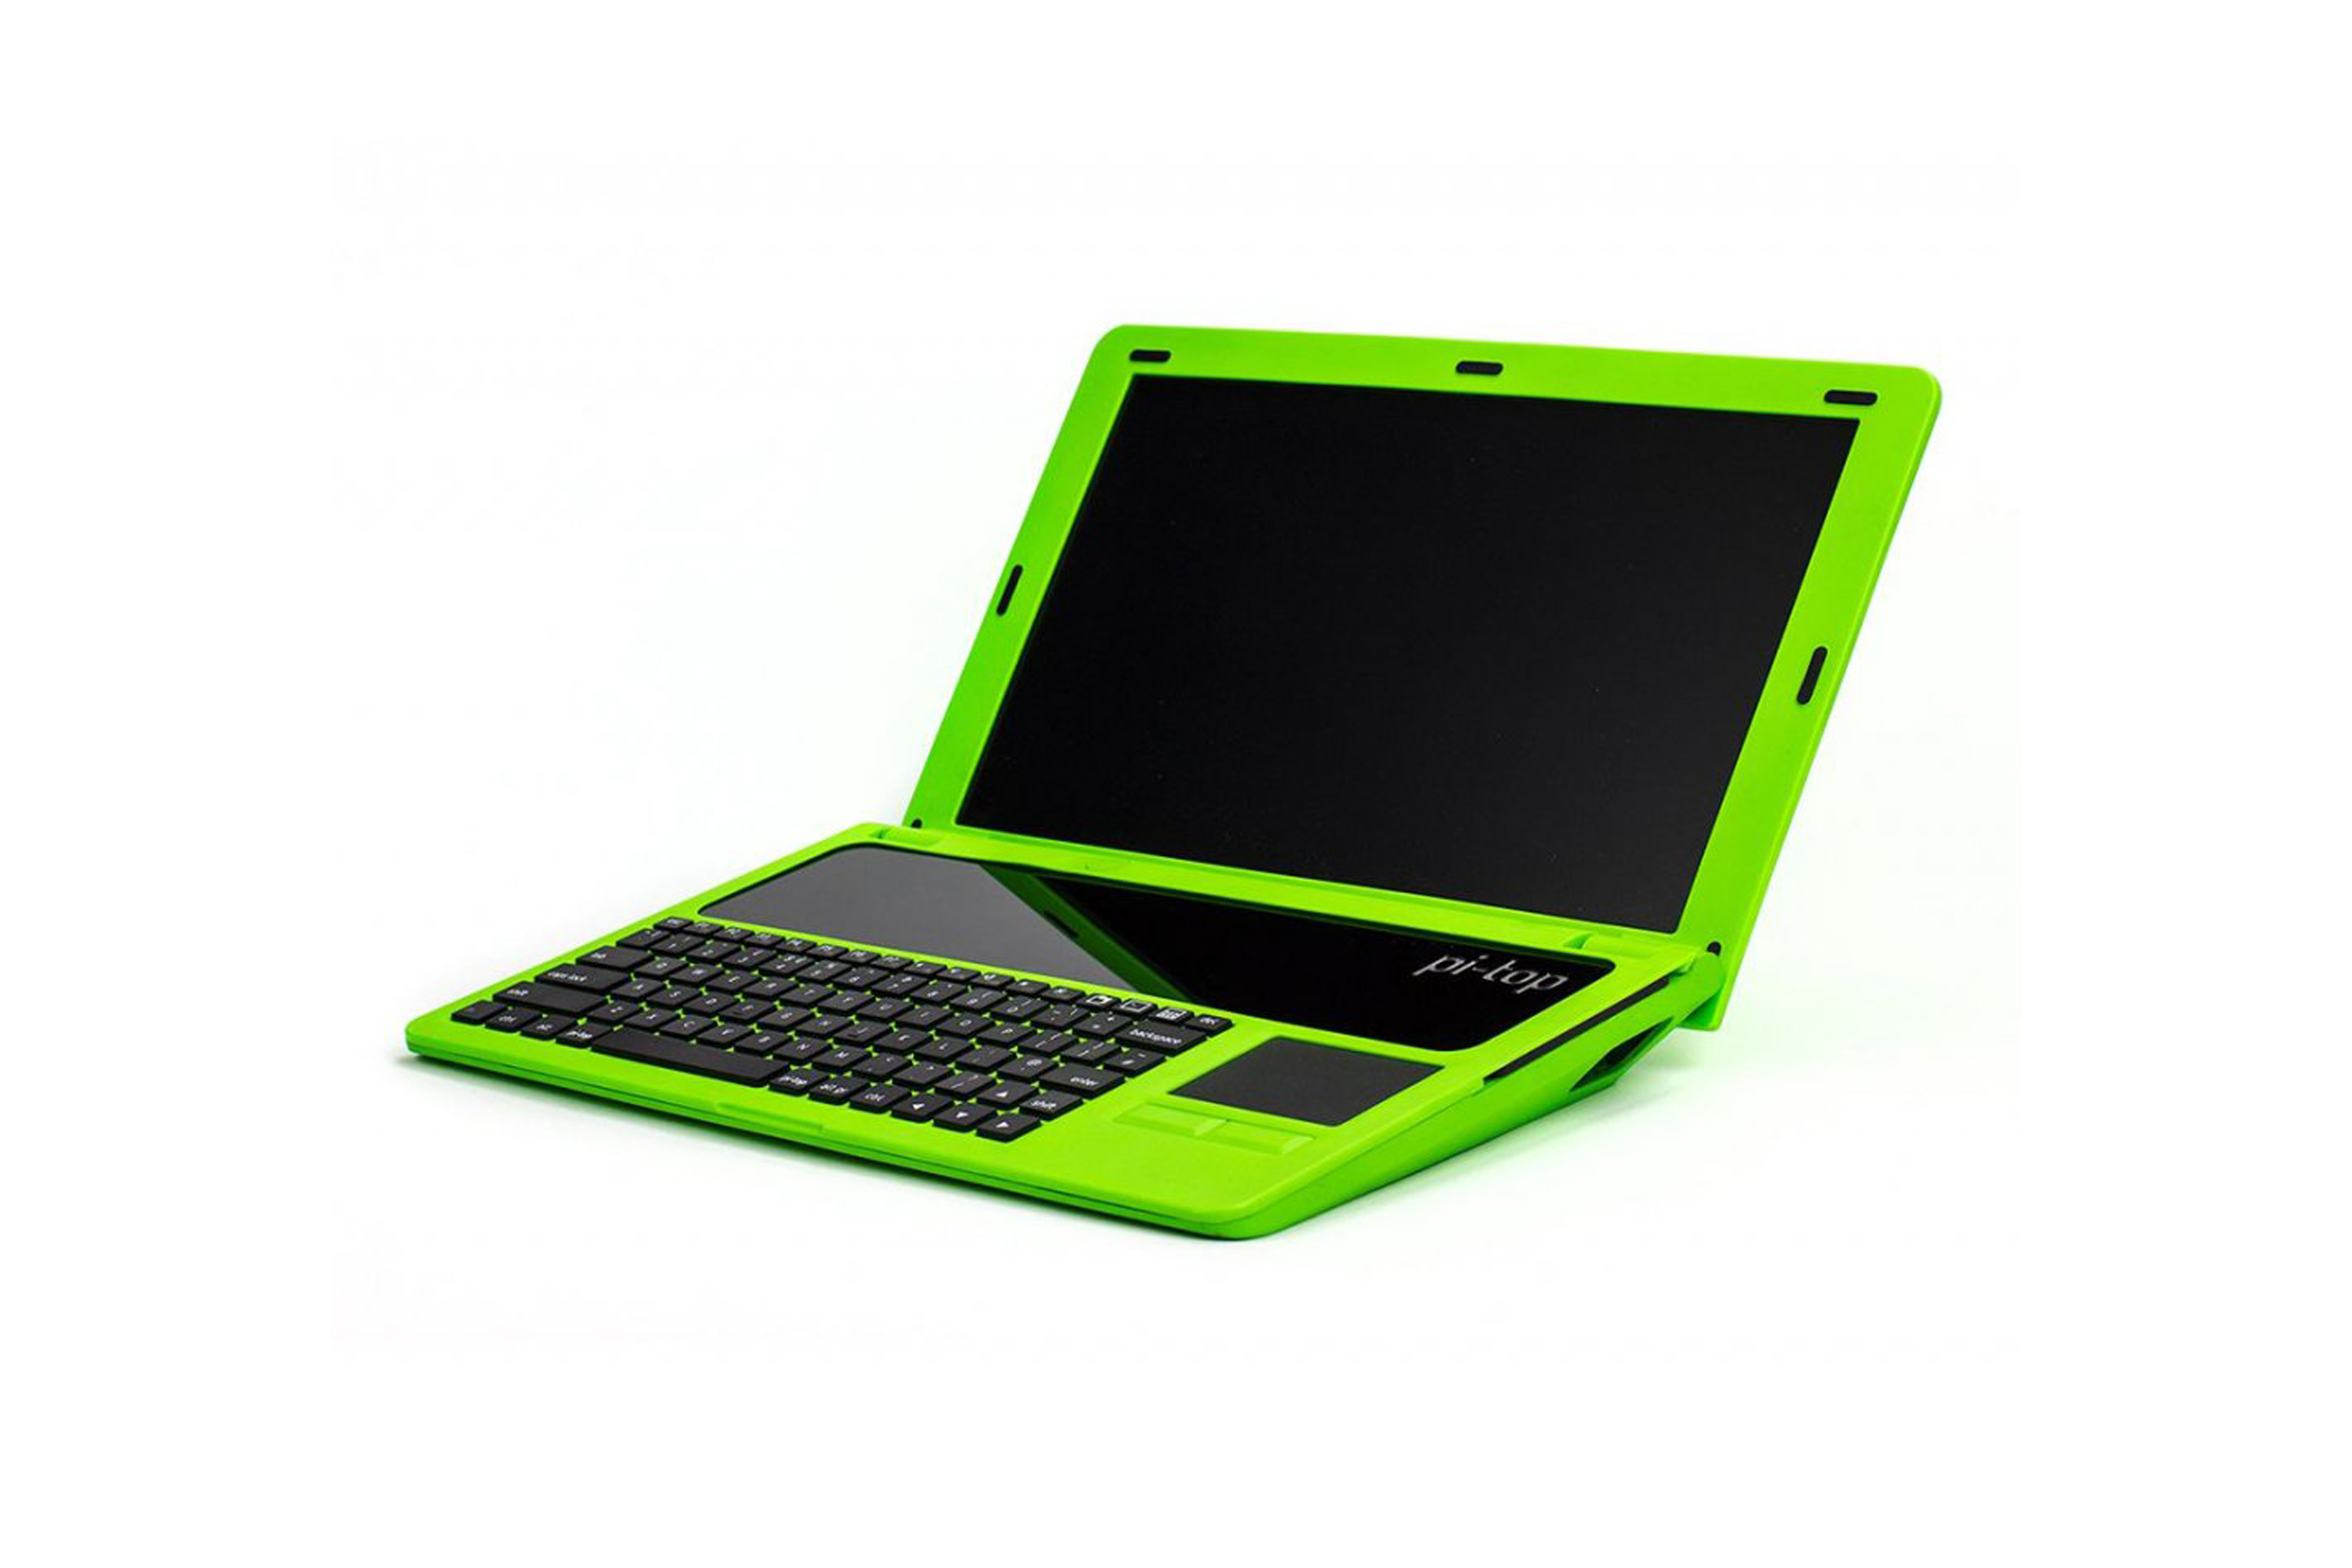 Pi-Top Raspberry Pi Laptop - Us Keyboard - Green